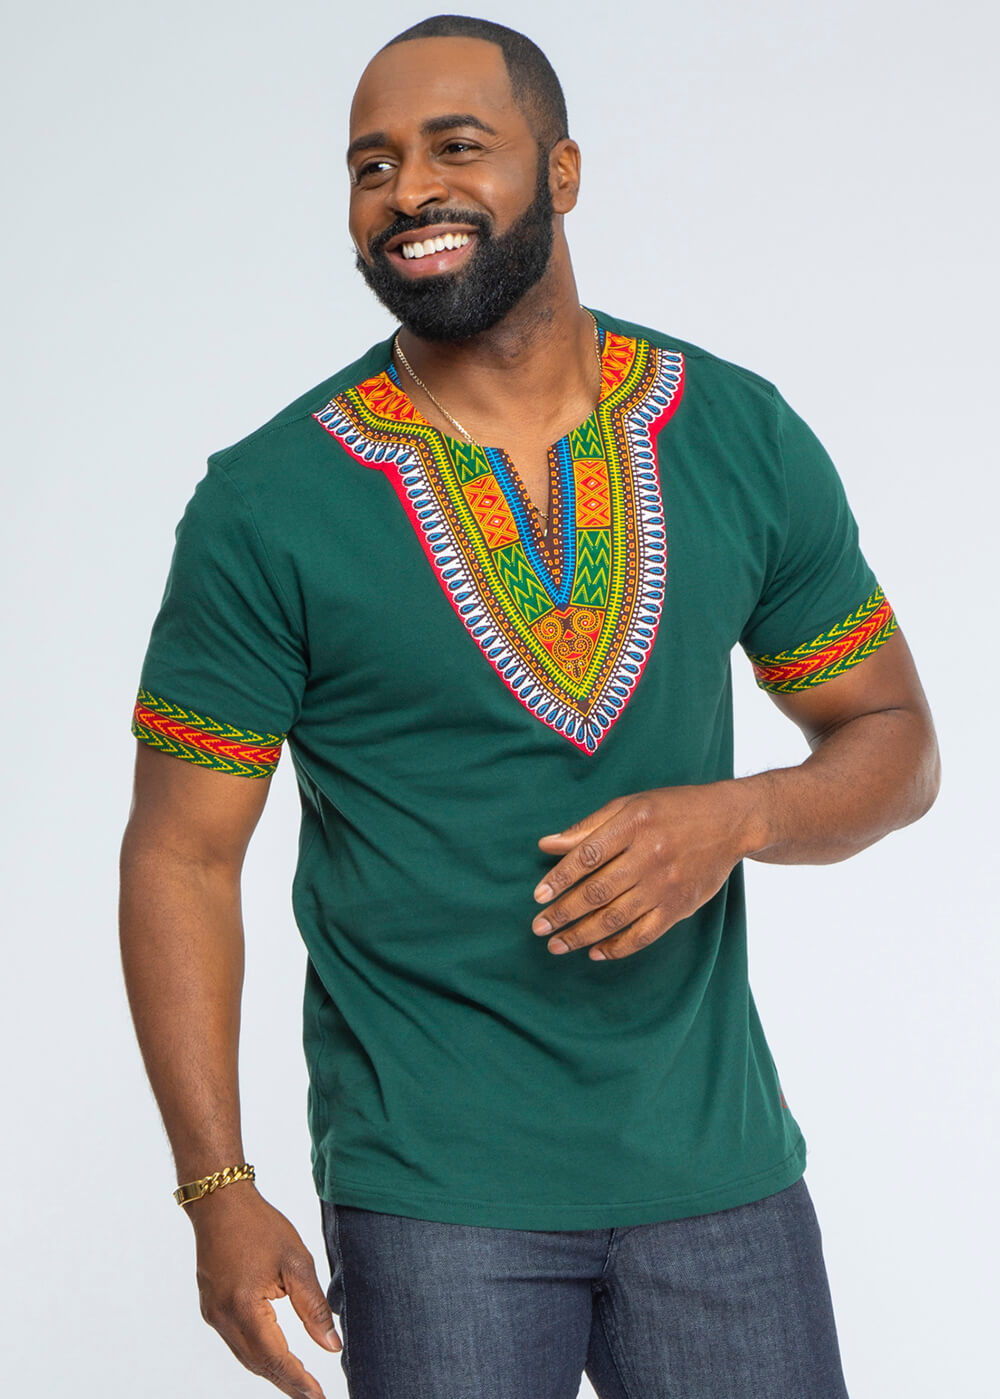 Men's African Print Dashiki T-Shirt (Forest Green/Maroon)